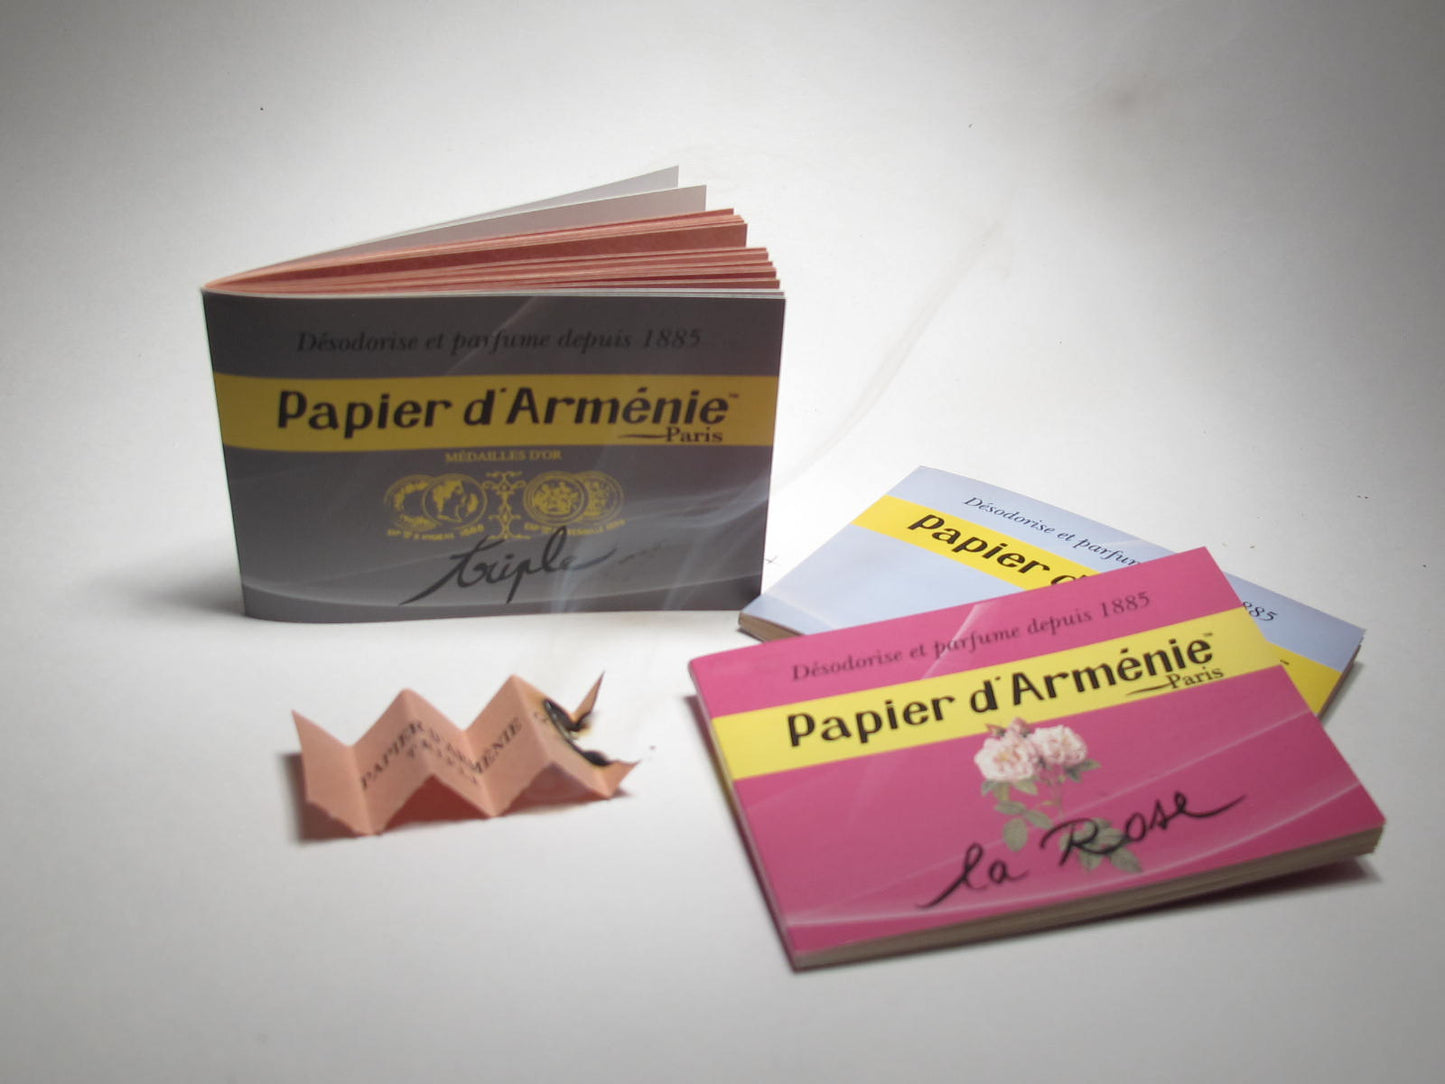 How to use - Papier d'Armenie